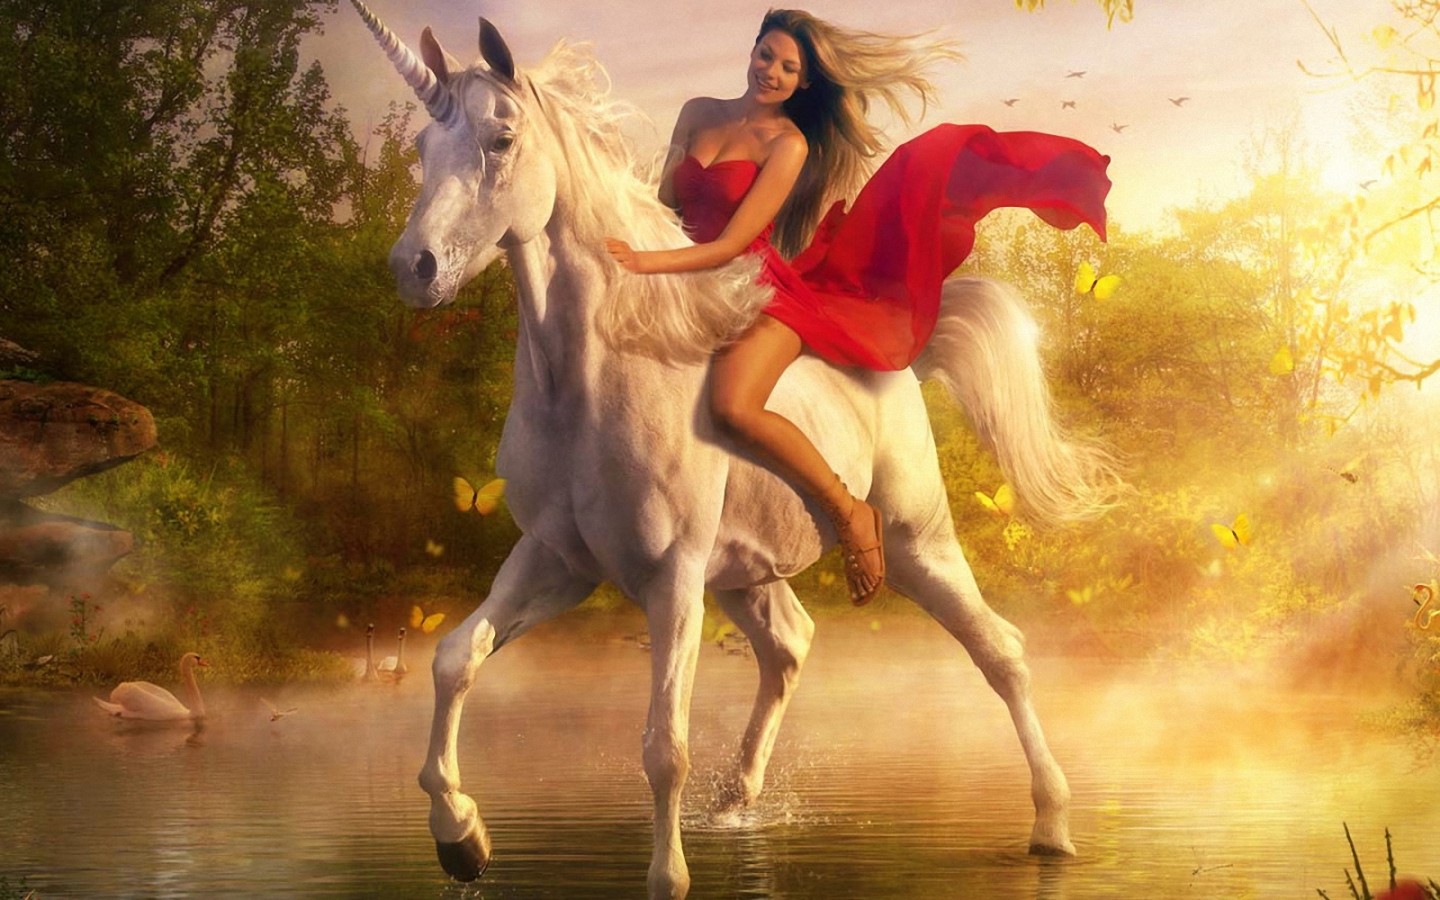 Unicorn Horse, A Beautiful Blue Girl In Red, Lake, Swans, HD Wallpaper, Wallpaper13.com